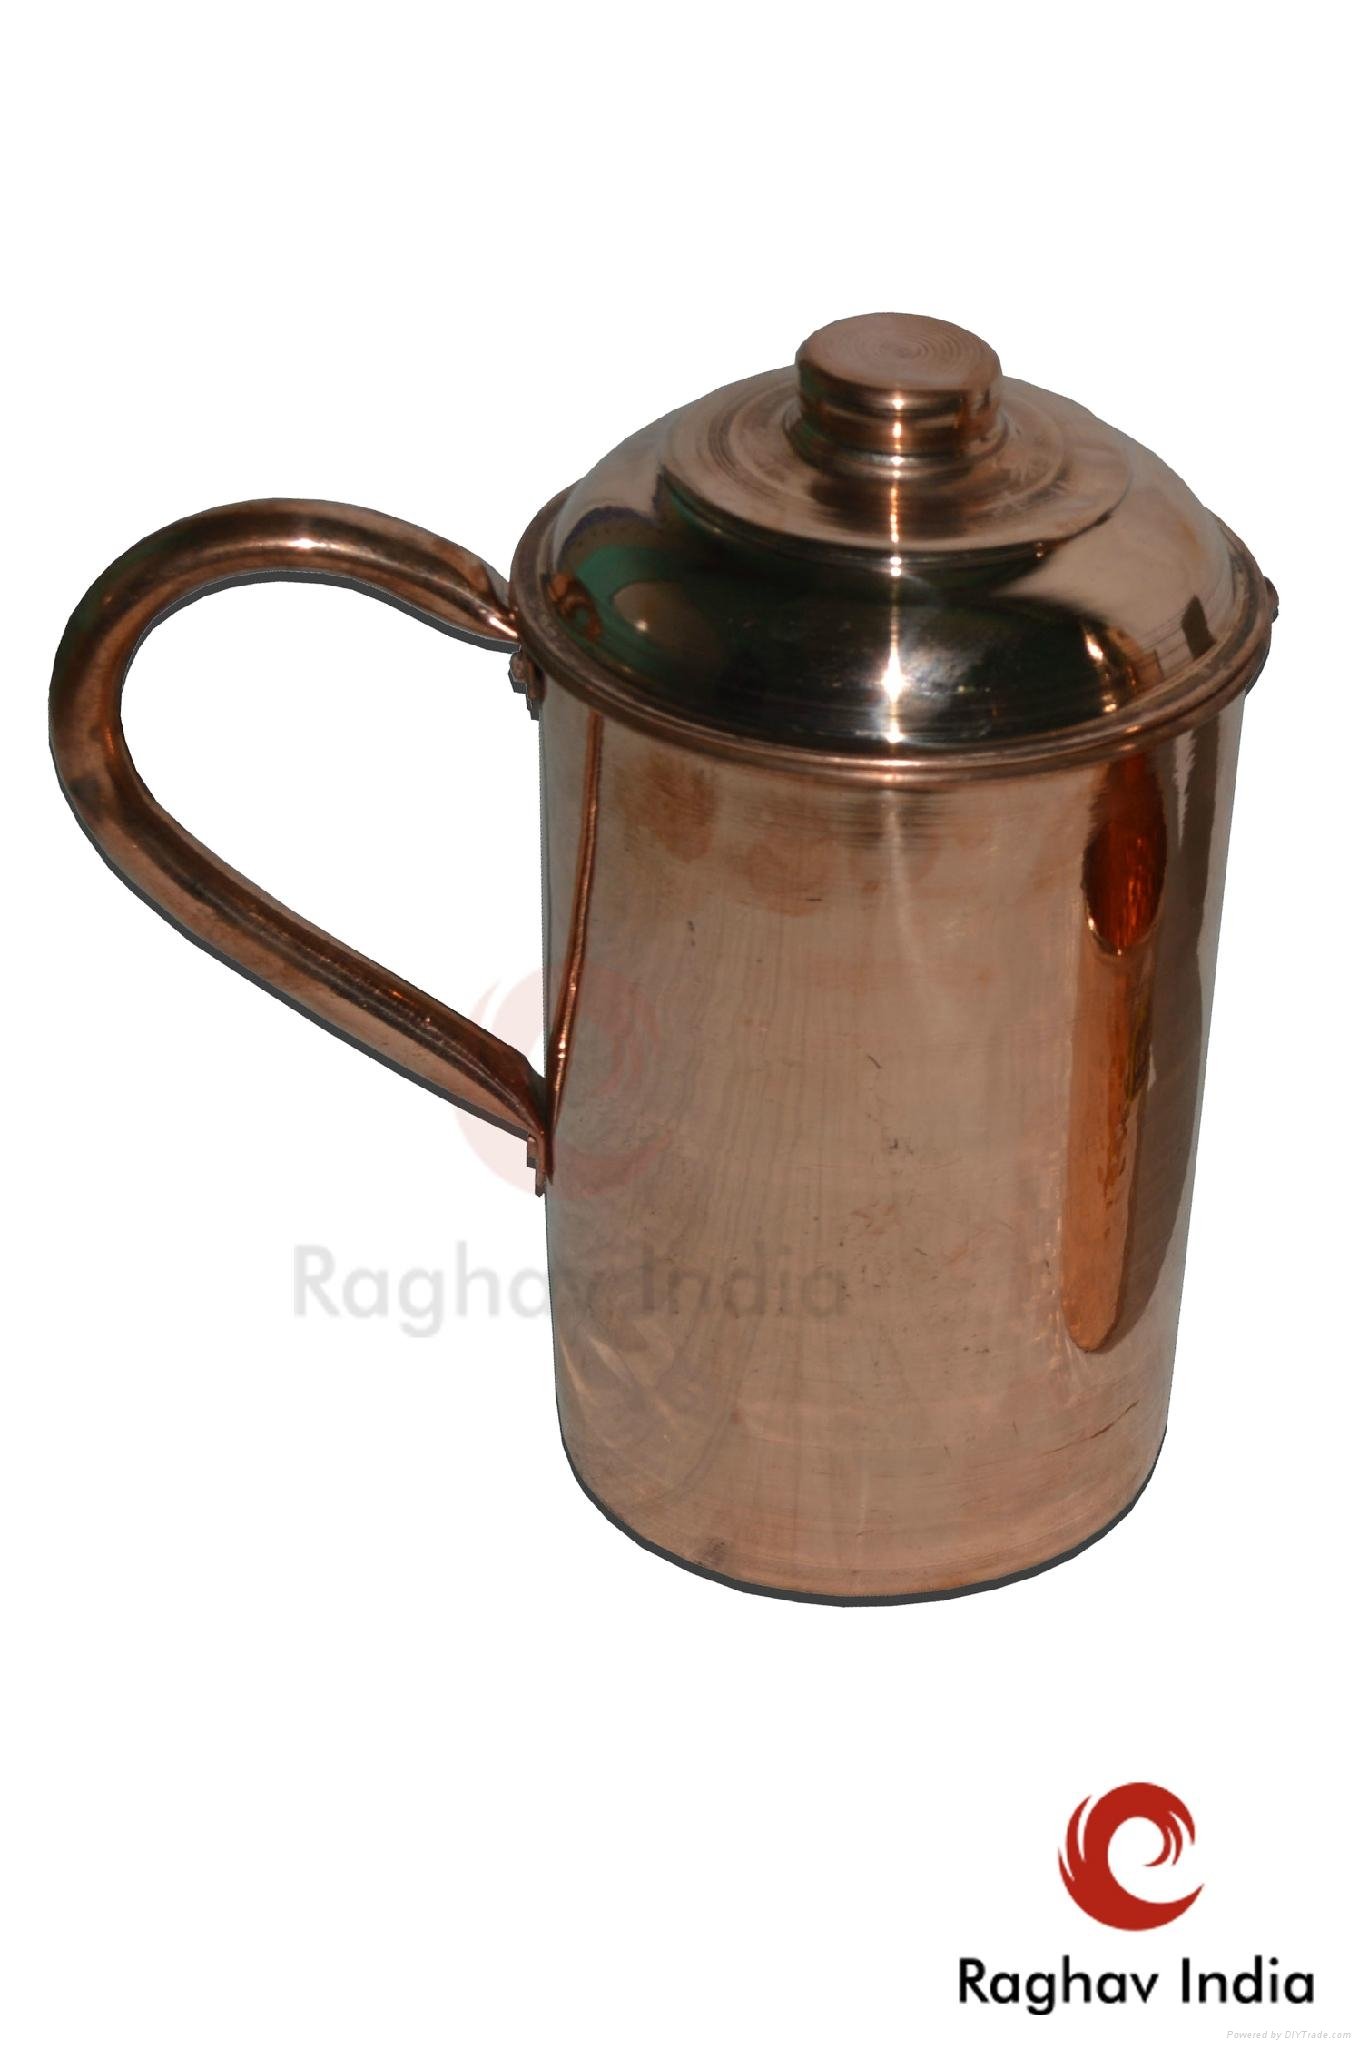  Raghav India 100% Genuine Pure Copper Curved Jug 1.6 Litre Capacity  1